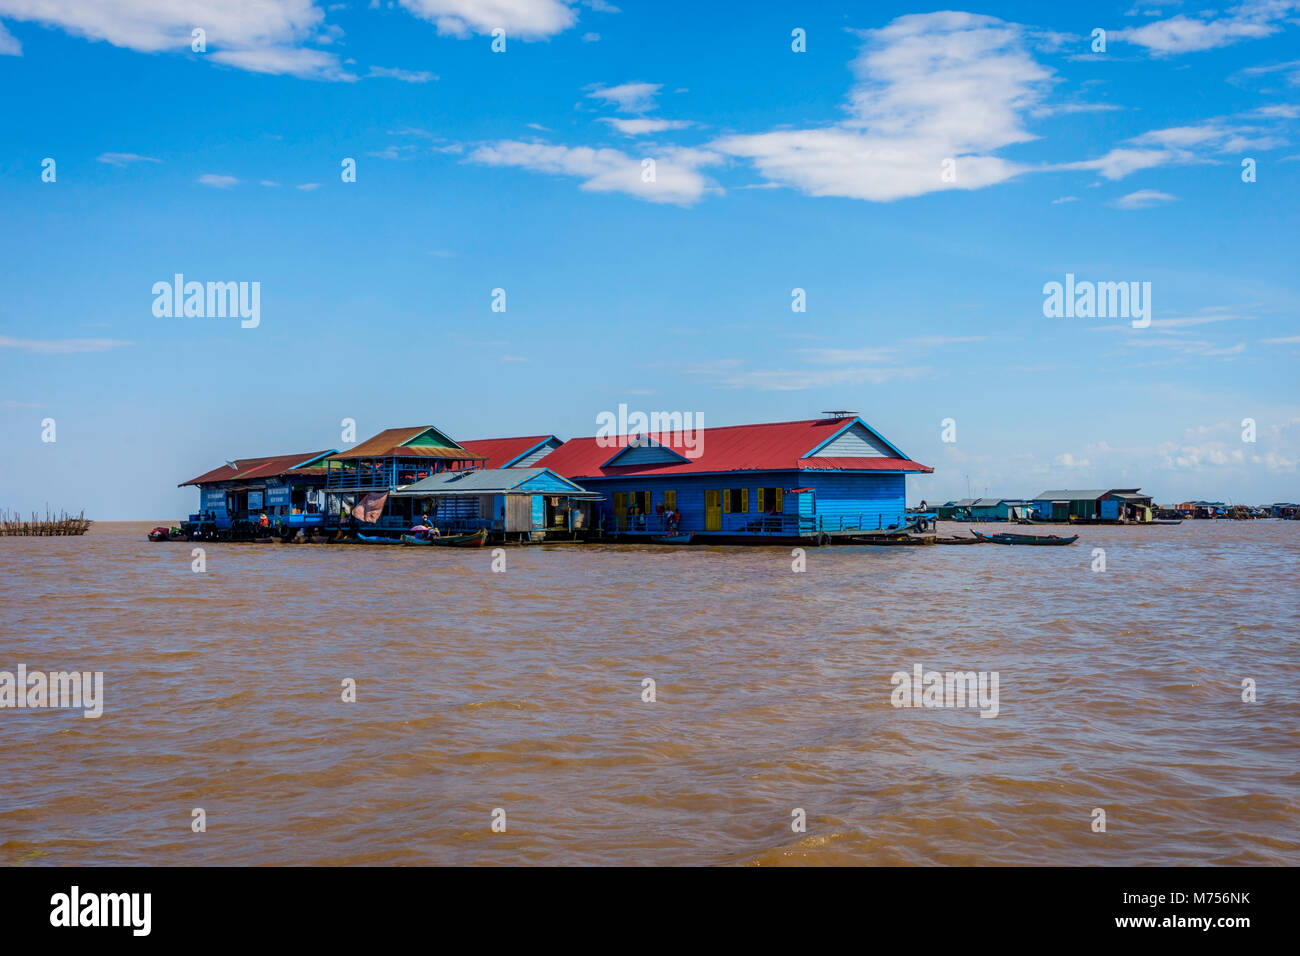 Houses of Tonle Sap floating village on the lake, Cambodia Stock Photo